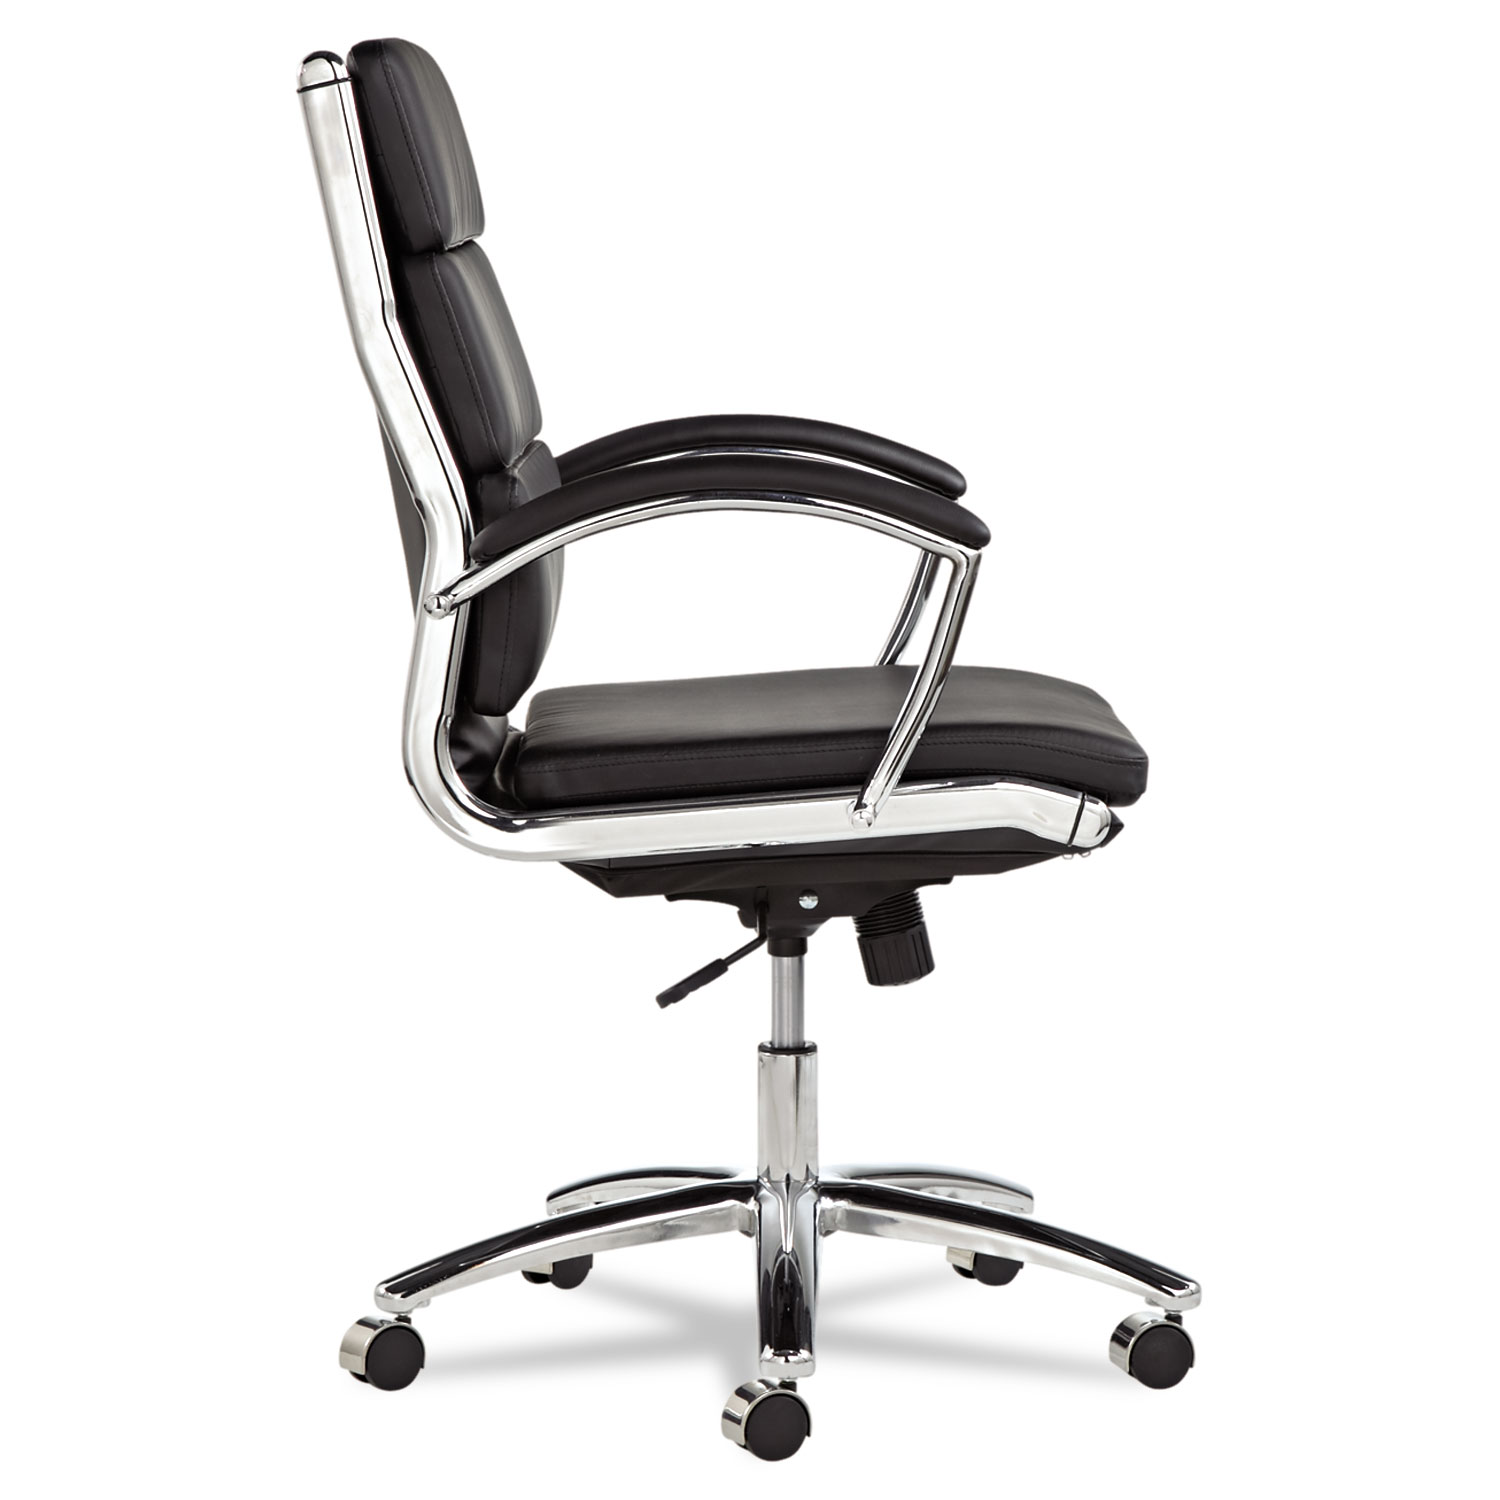 Alera Neratoli Mid-Back Slim Profile Chair, Faux Leather, Supports Up to 275 lb, Black Seat/Back, Chrome Base - image 2 of 8